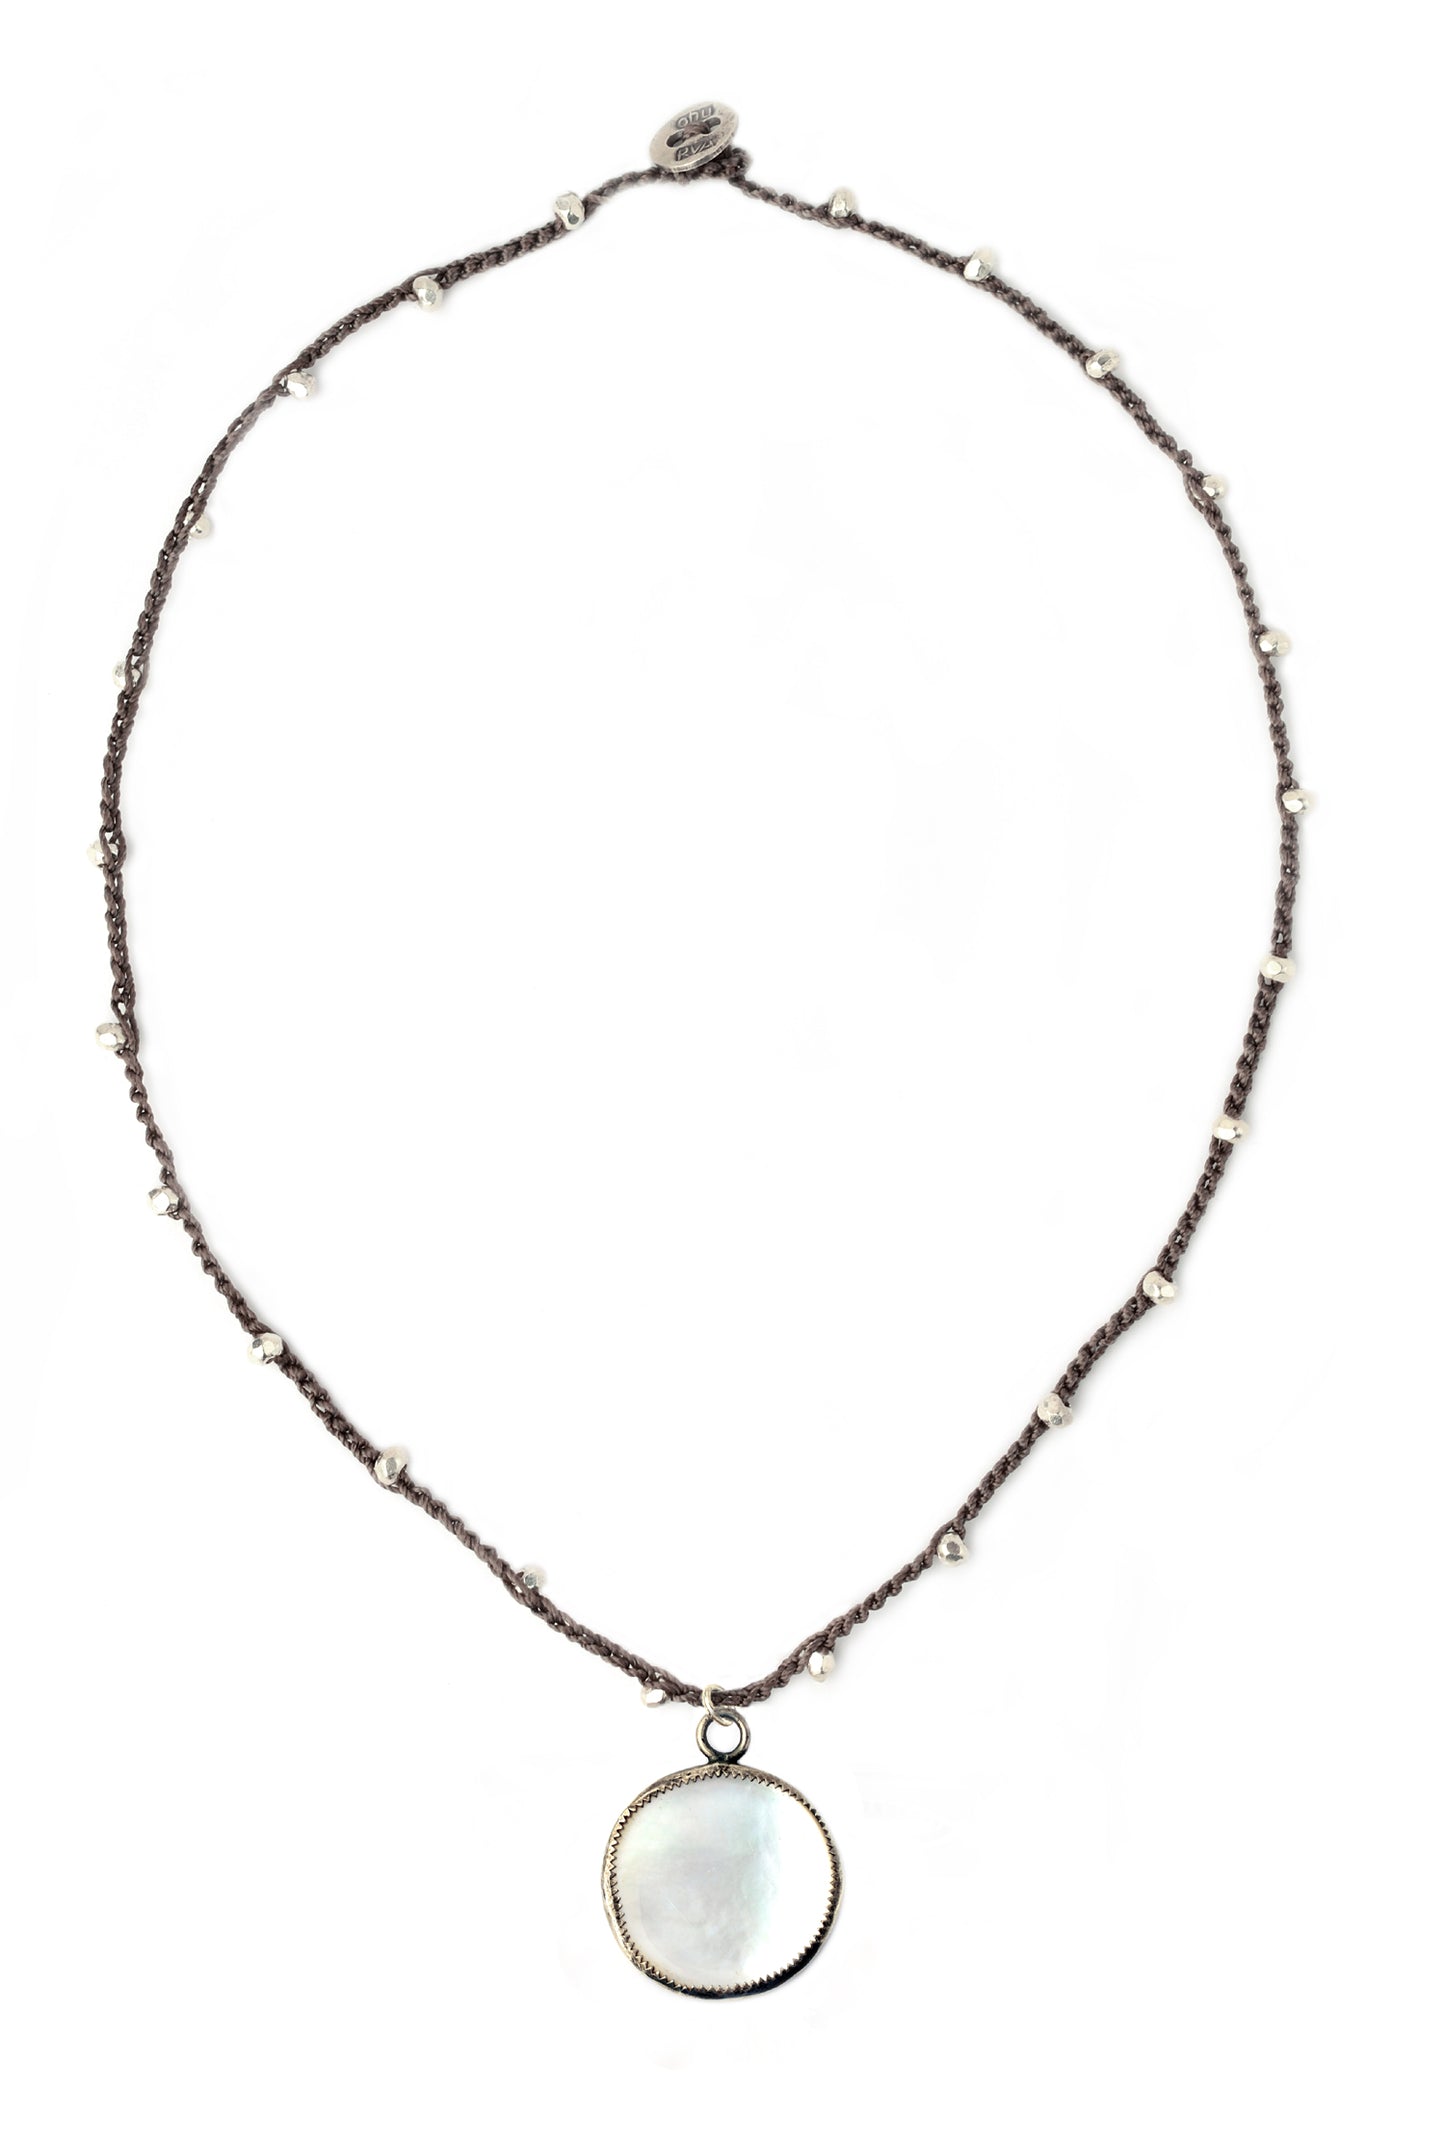 On U Jewelry - Antique Mother of Pearl Bezel-Set Button necklace designed by Donna Silvestri, On U Jewelry, Richmond, VA